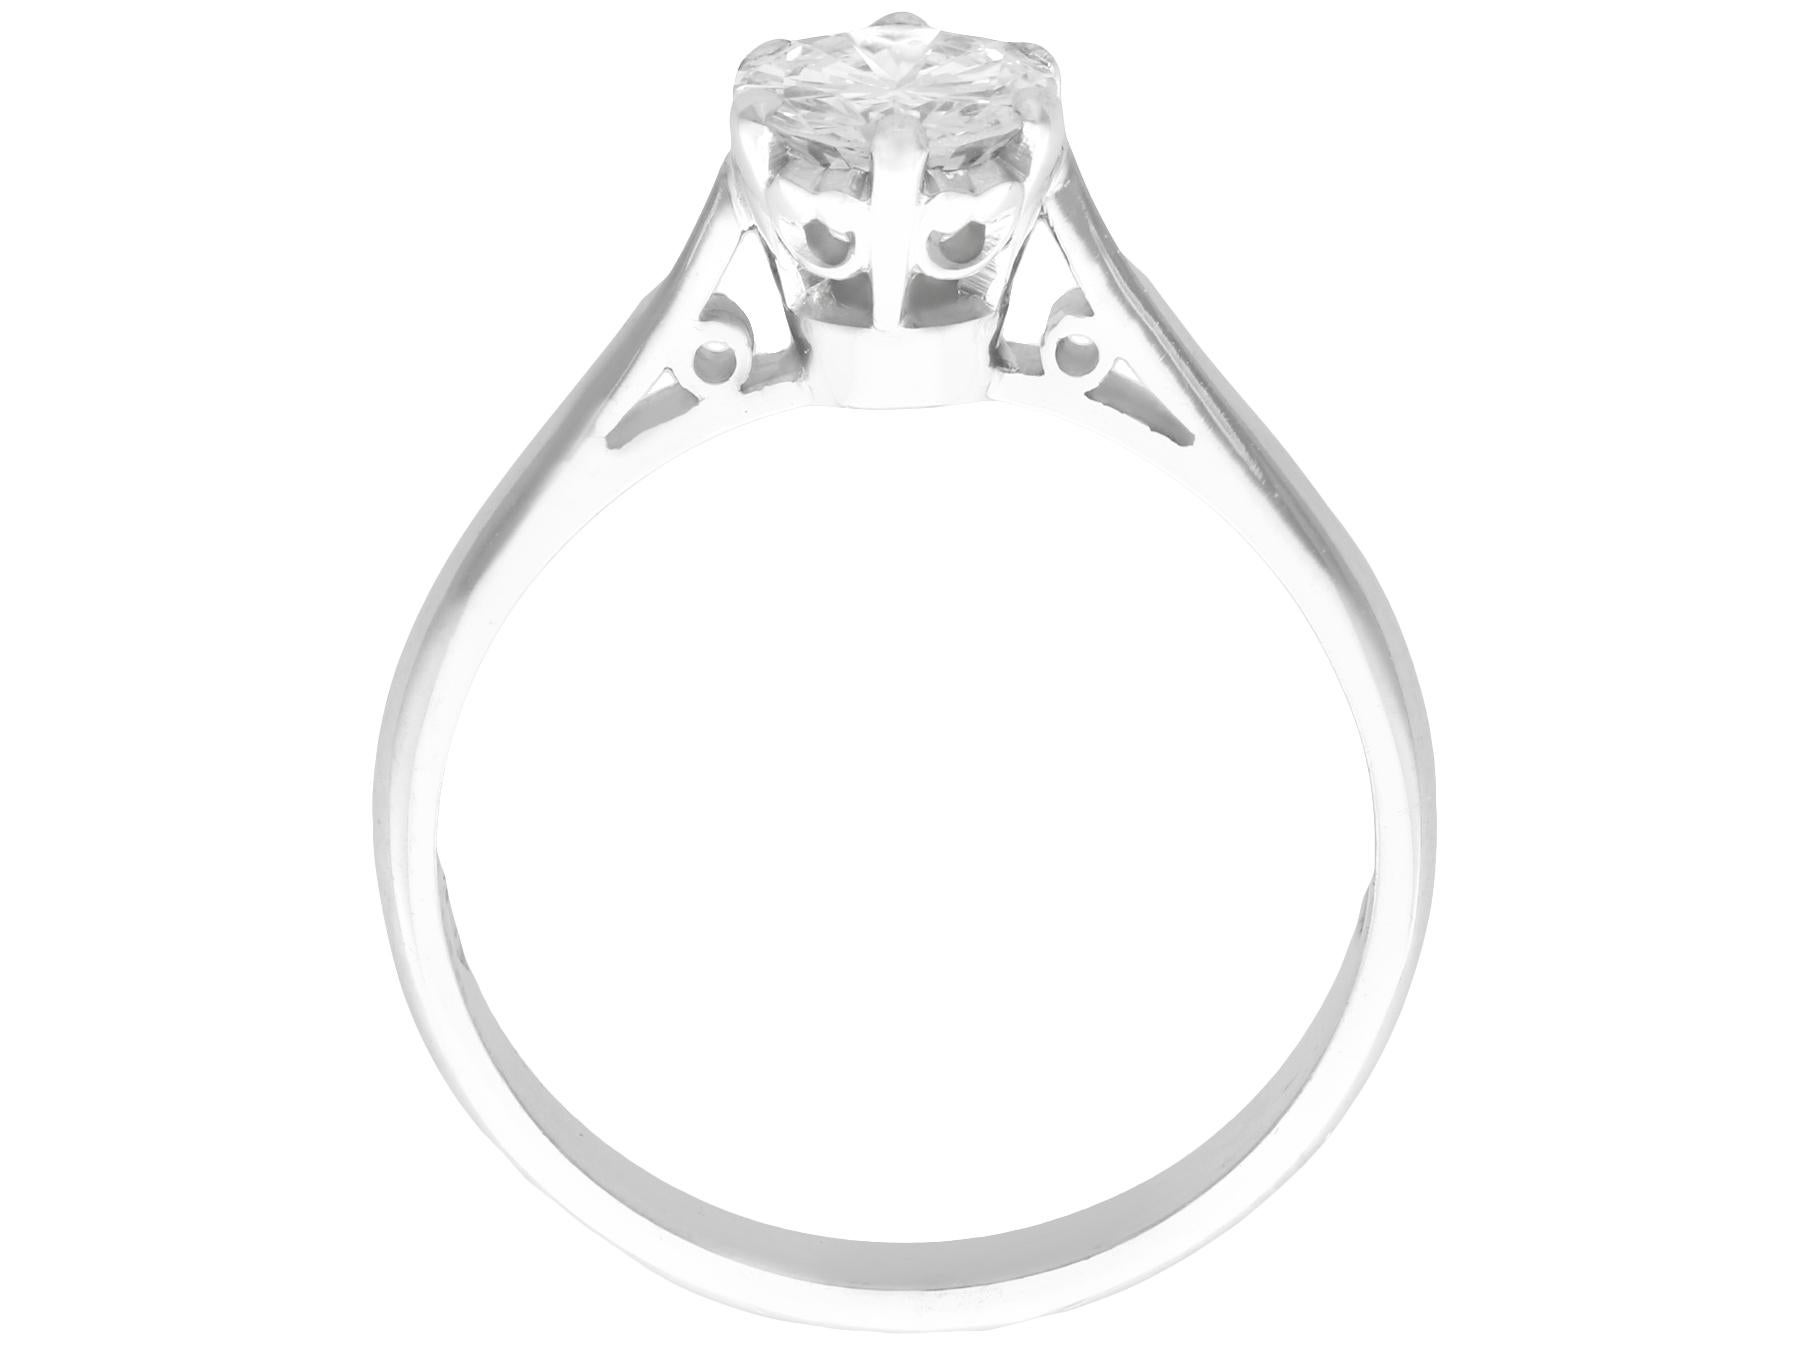 1970s diamond engagement rings